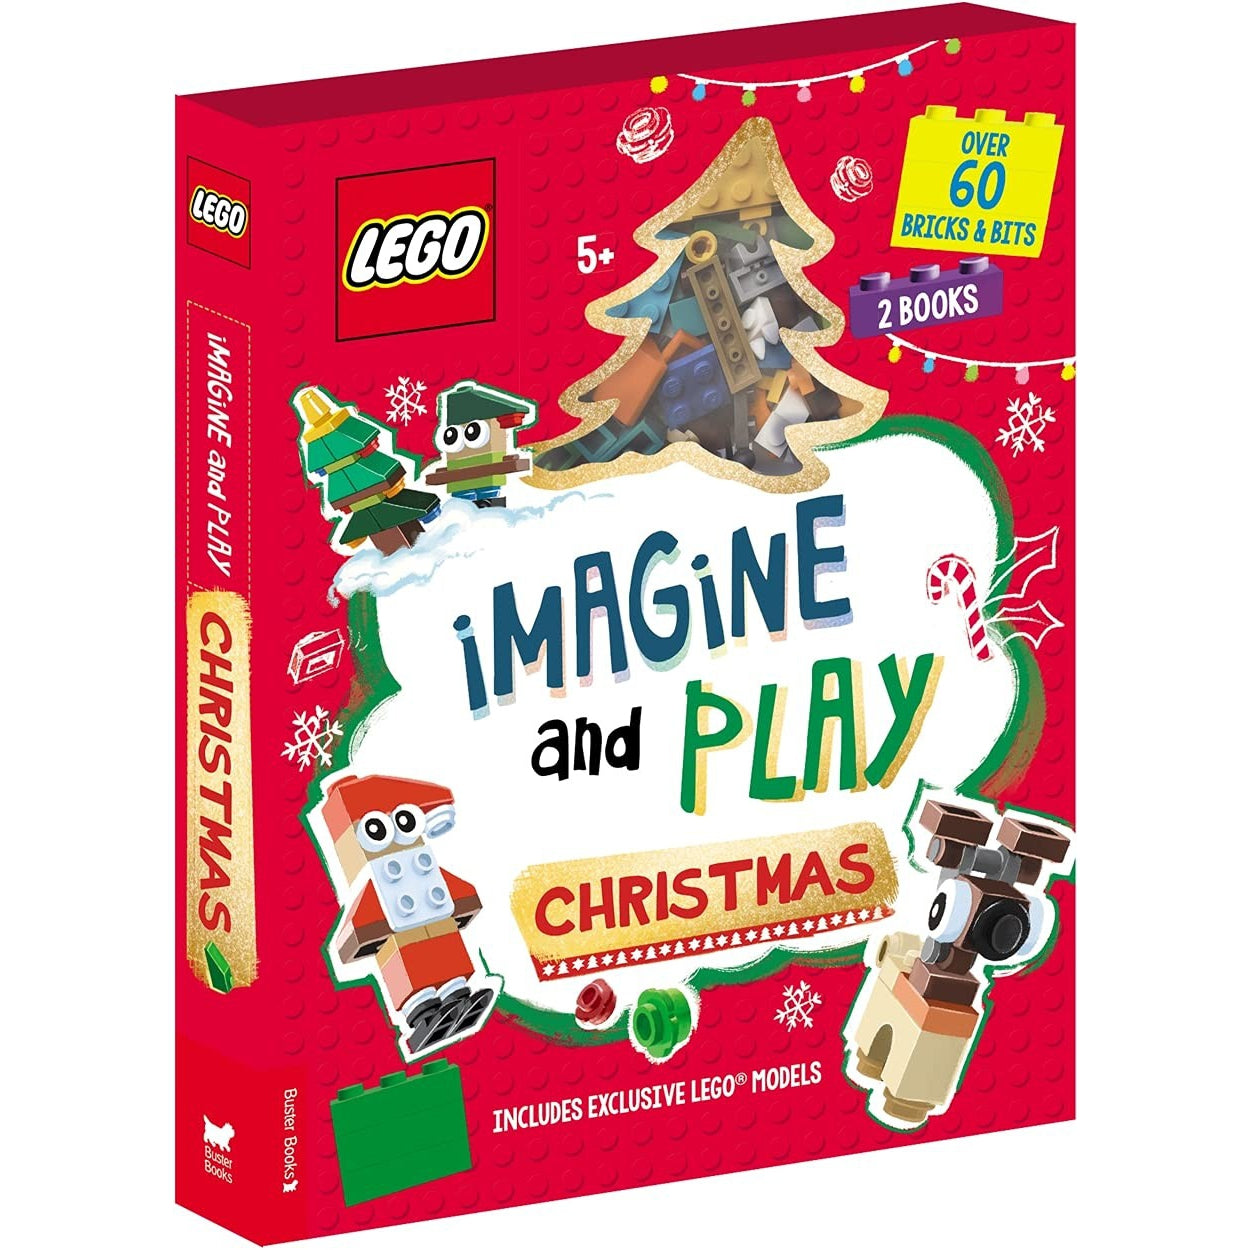 LEGO® Iconic: Imagine and Play Christmas